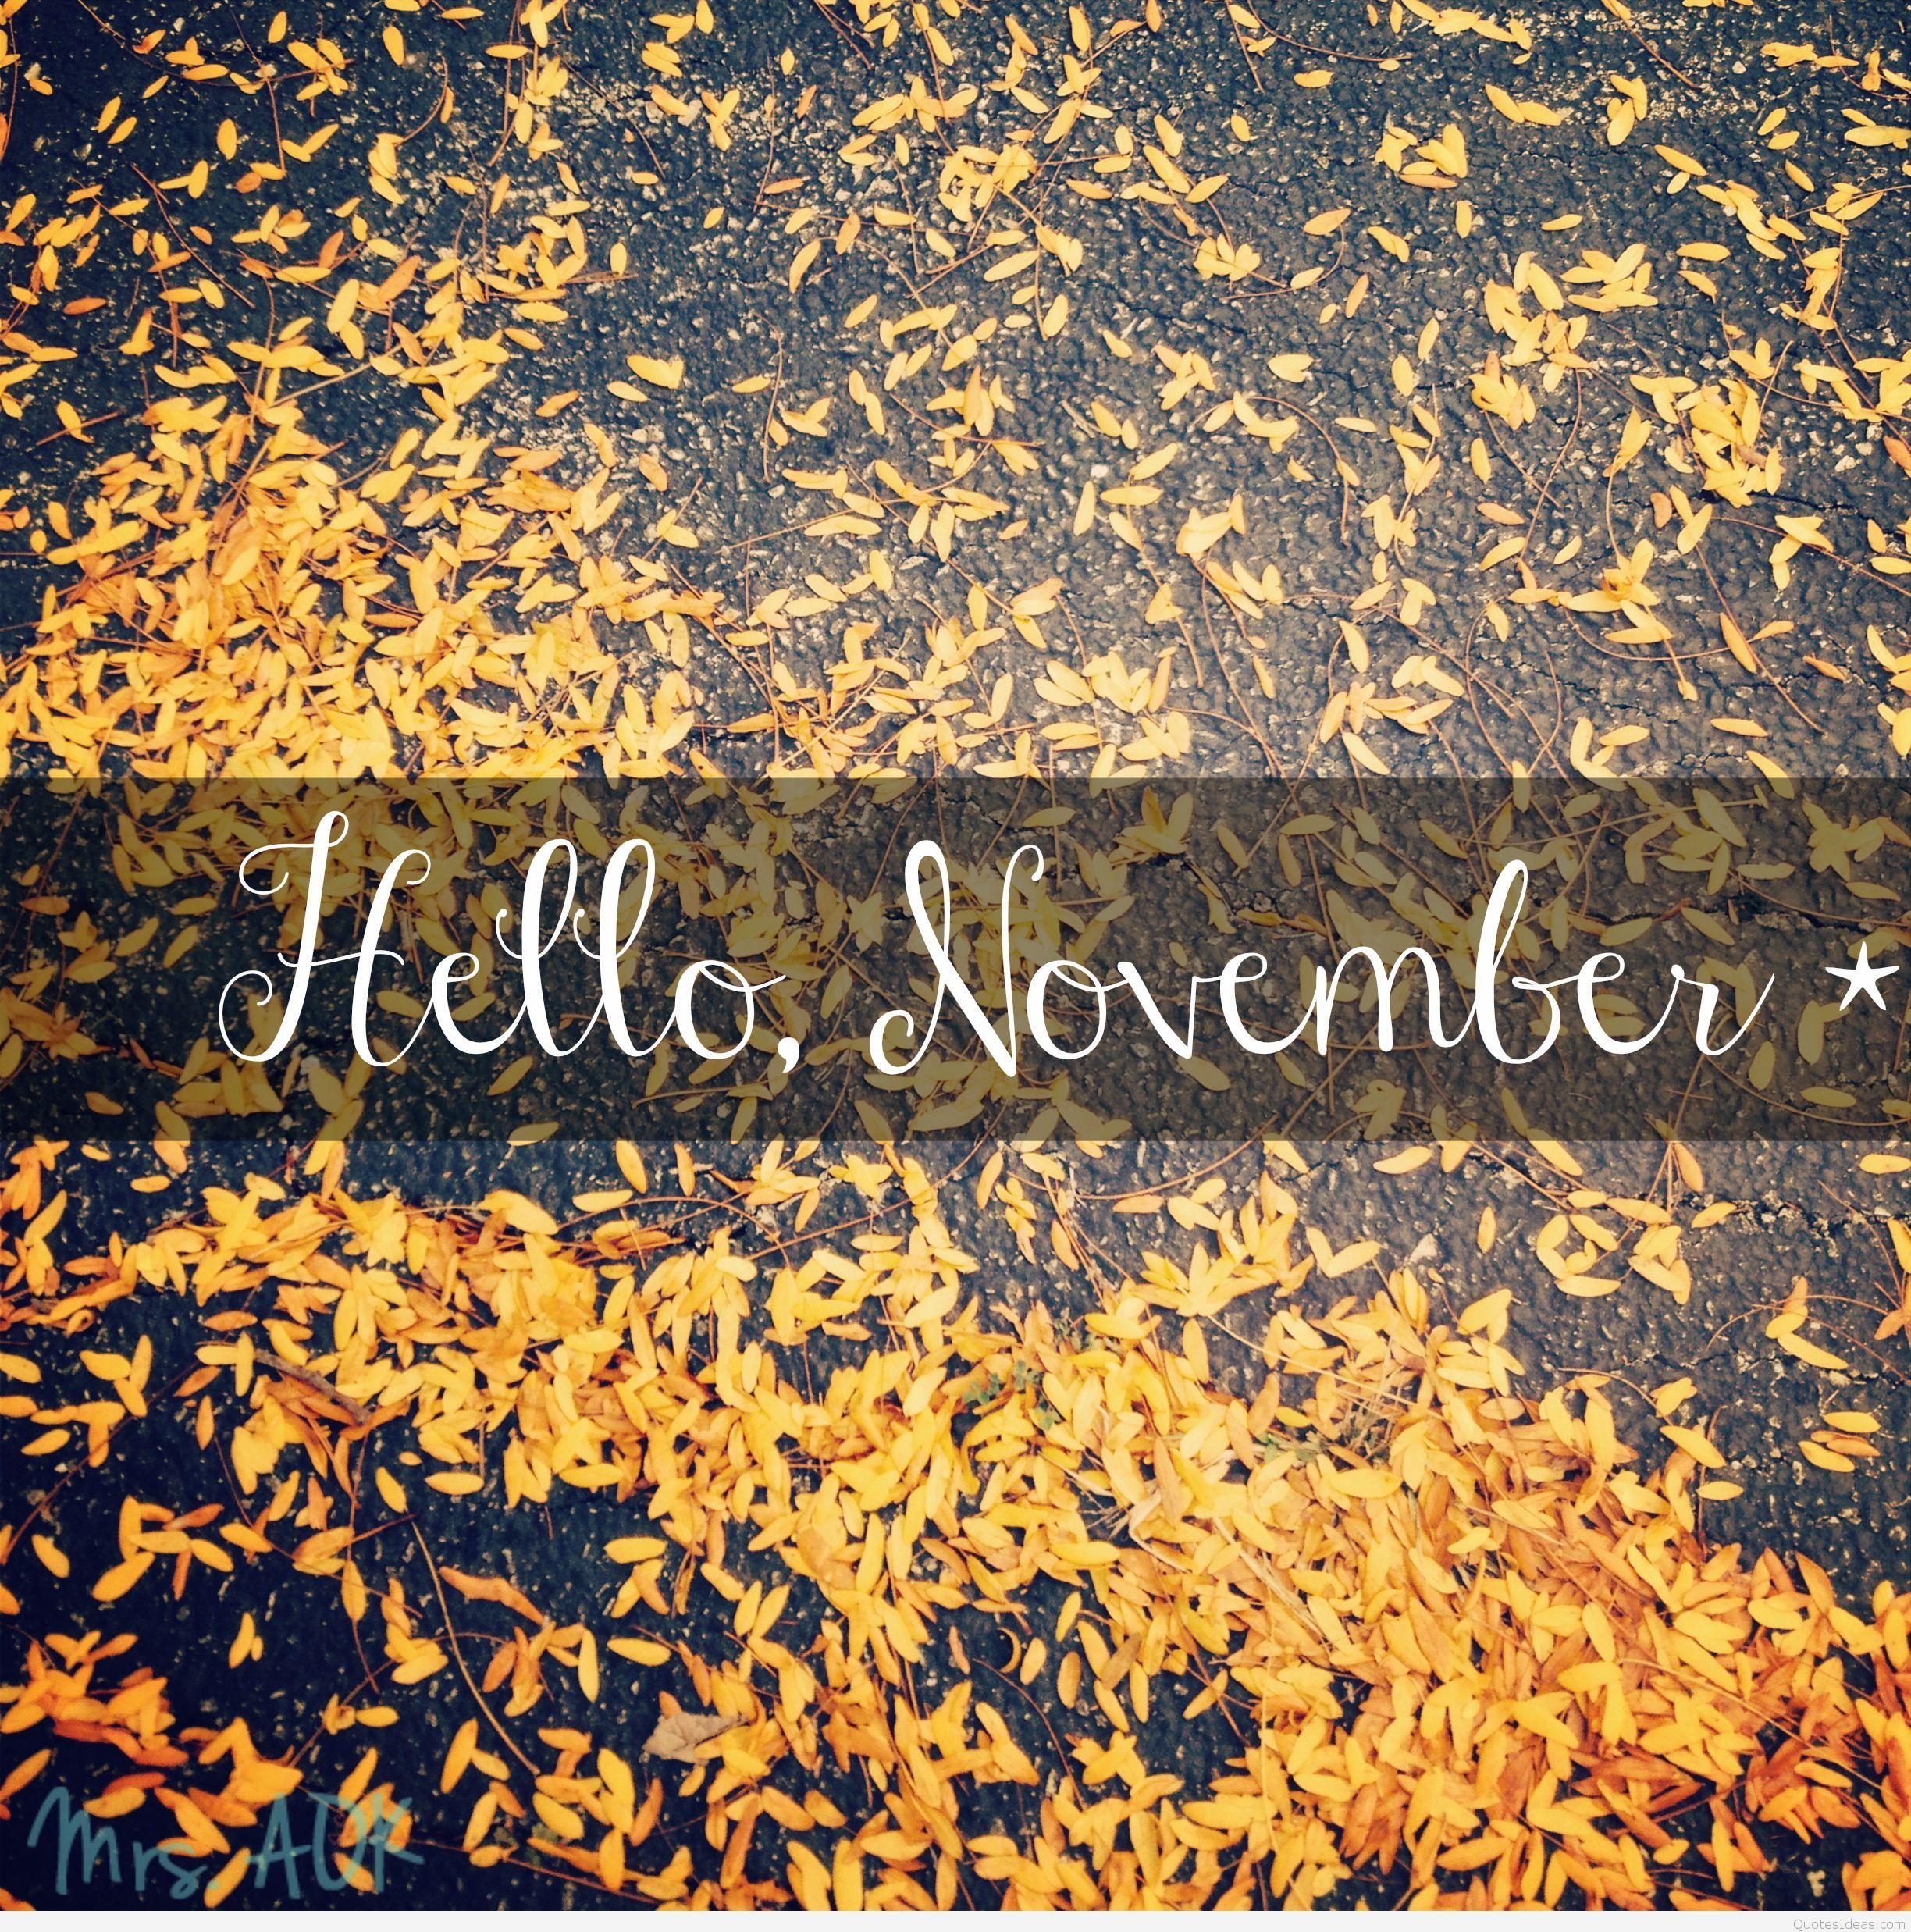 Hello November Wallpapers - Top Free Hello November Backgrounds ...